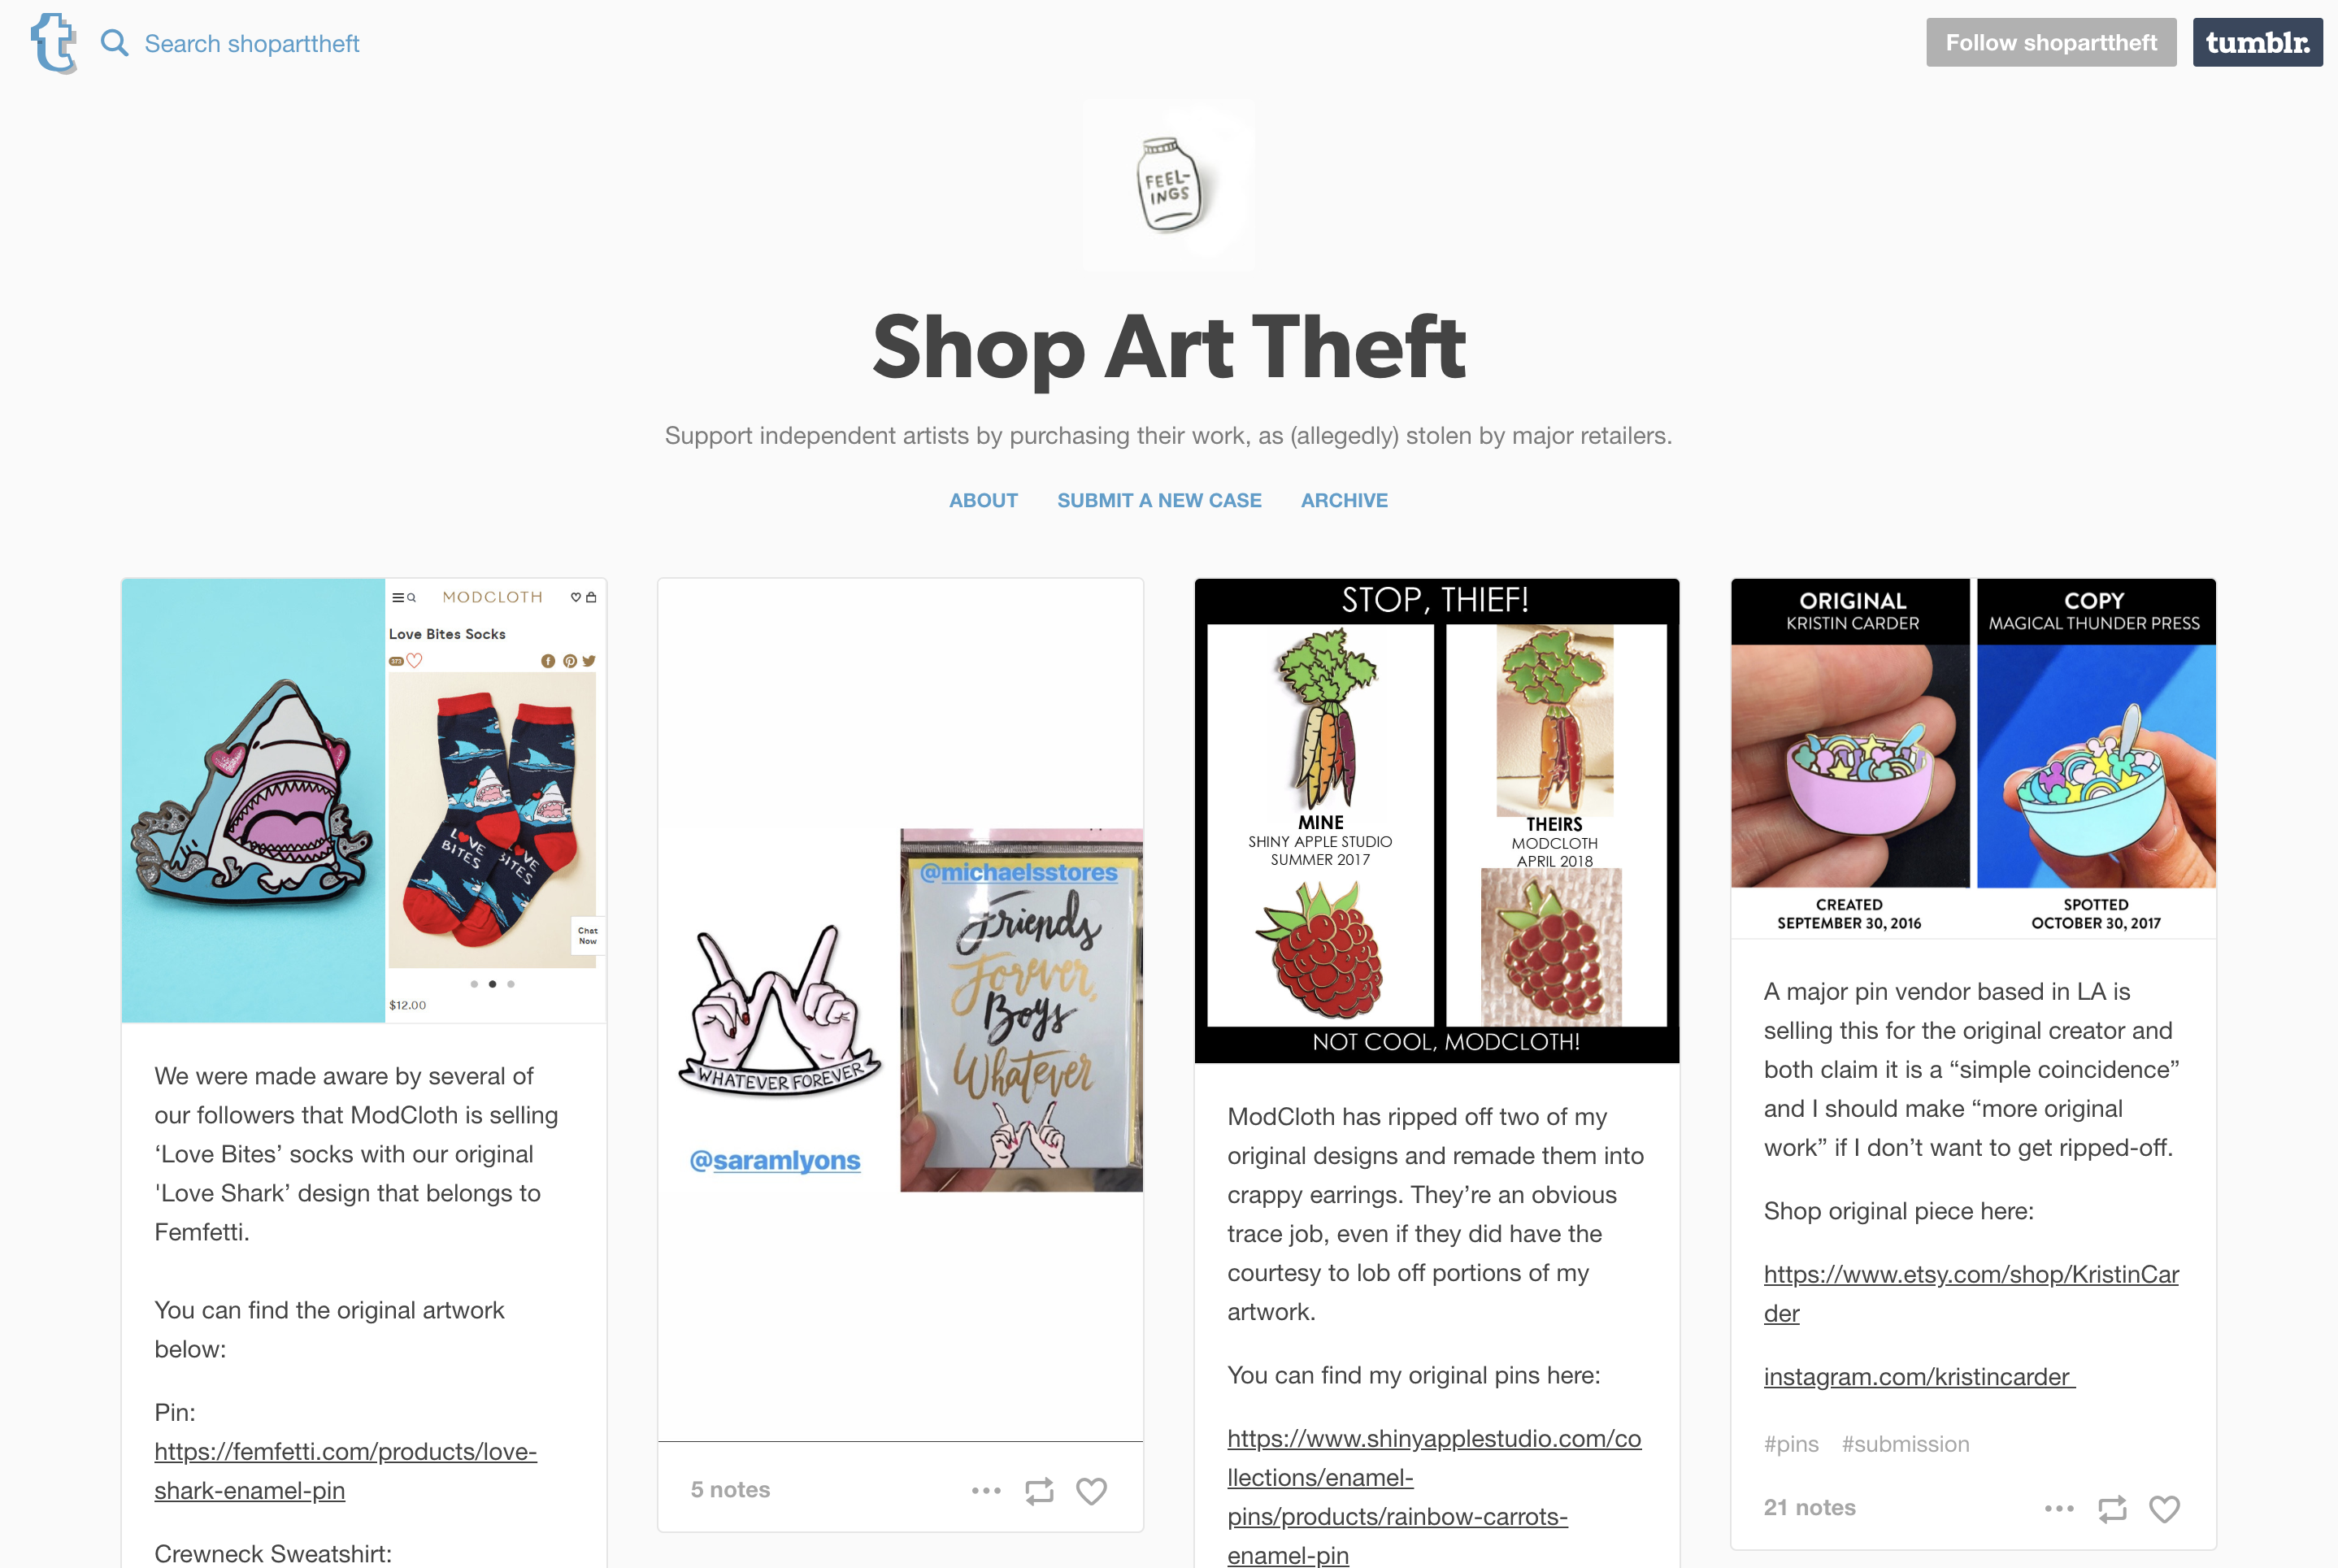 screenshot of "shop art theft" tumblr